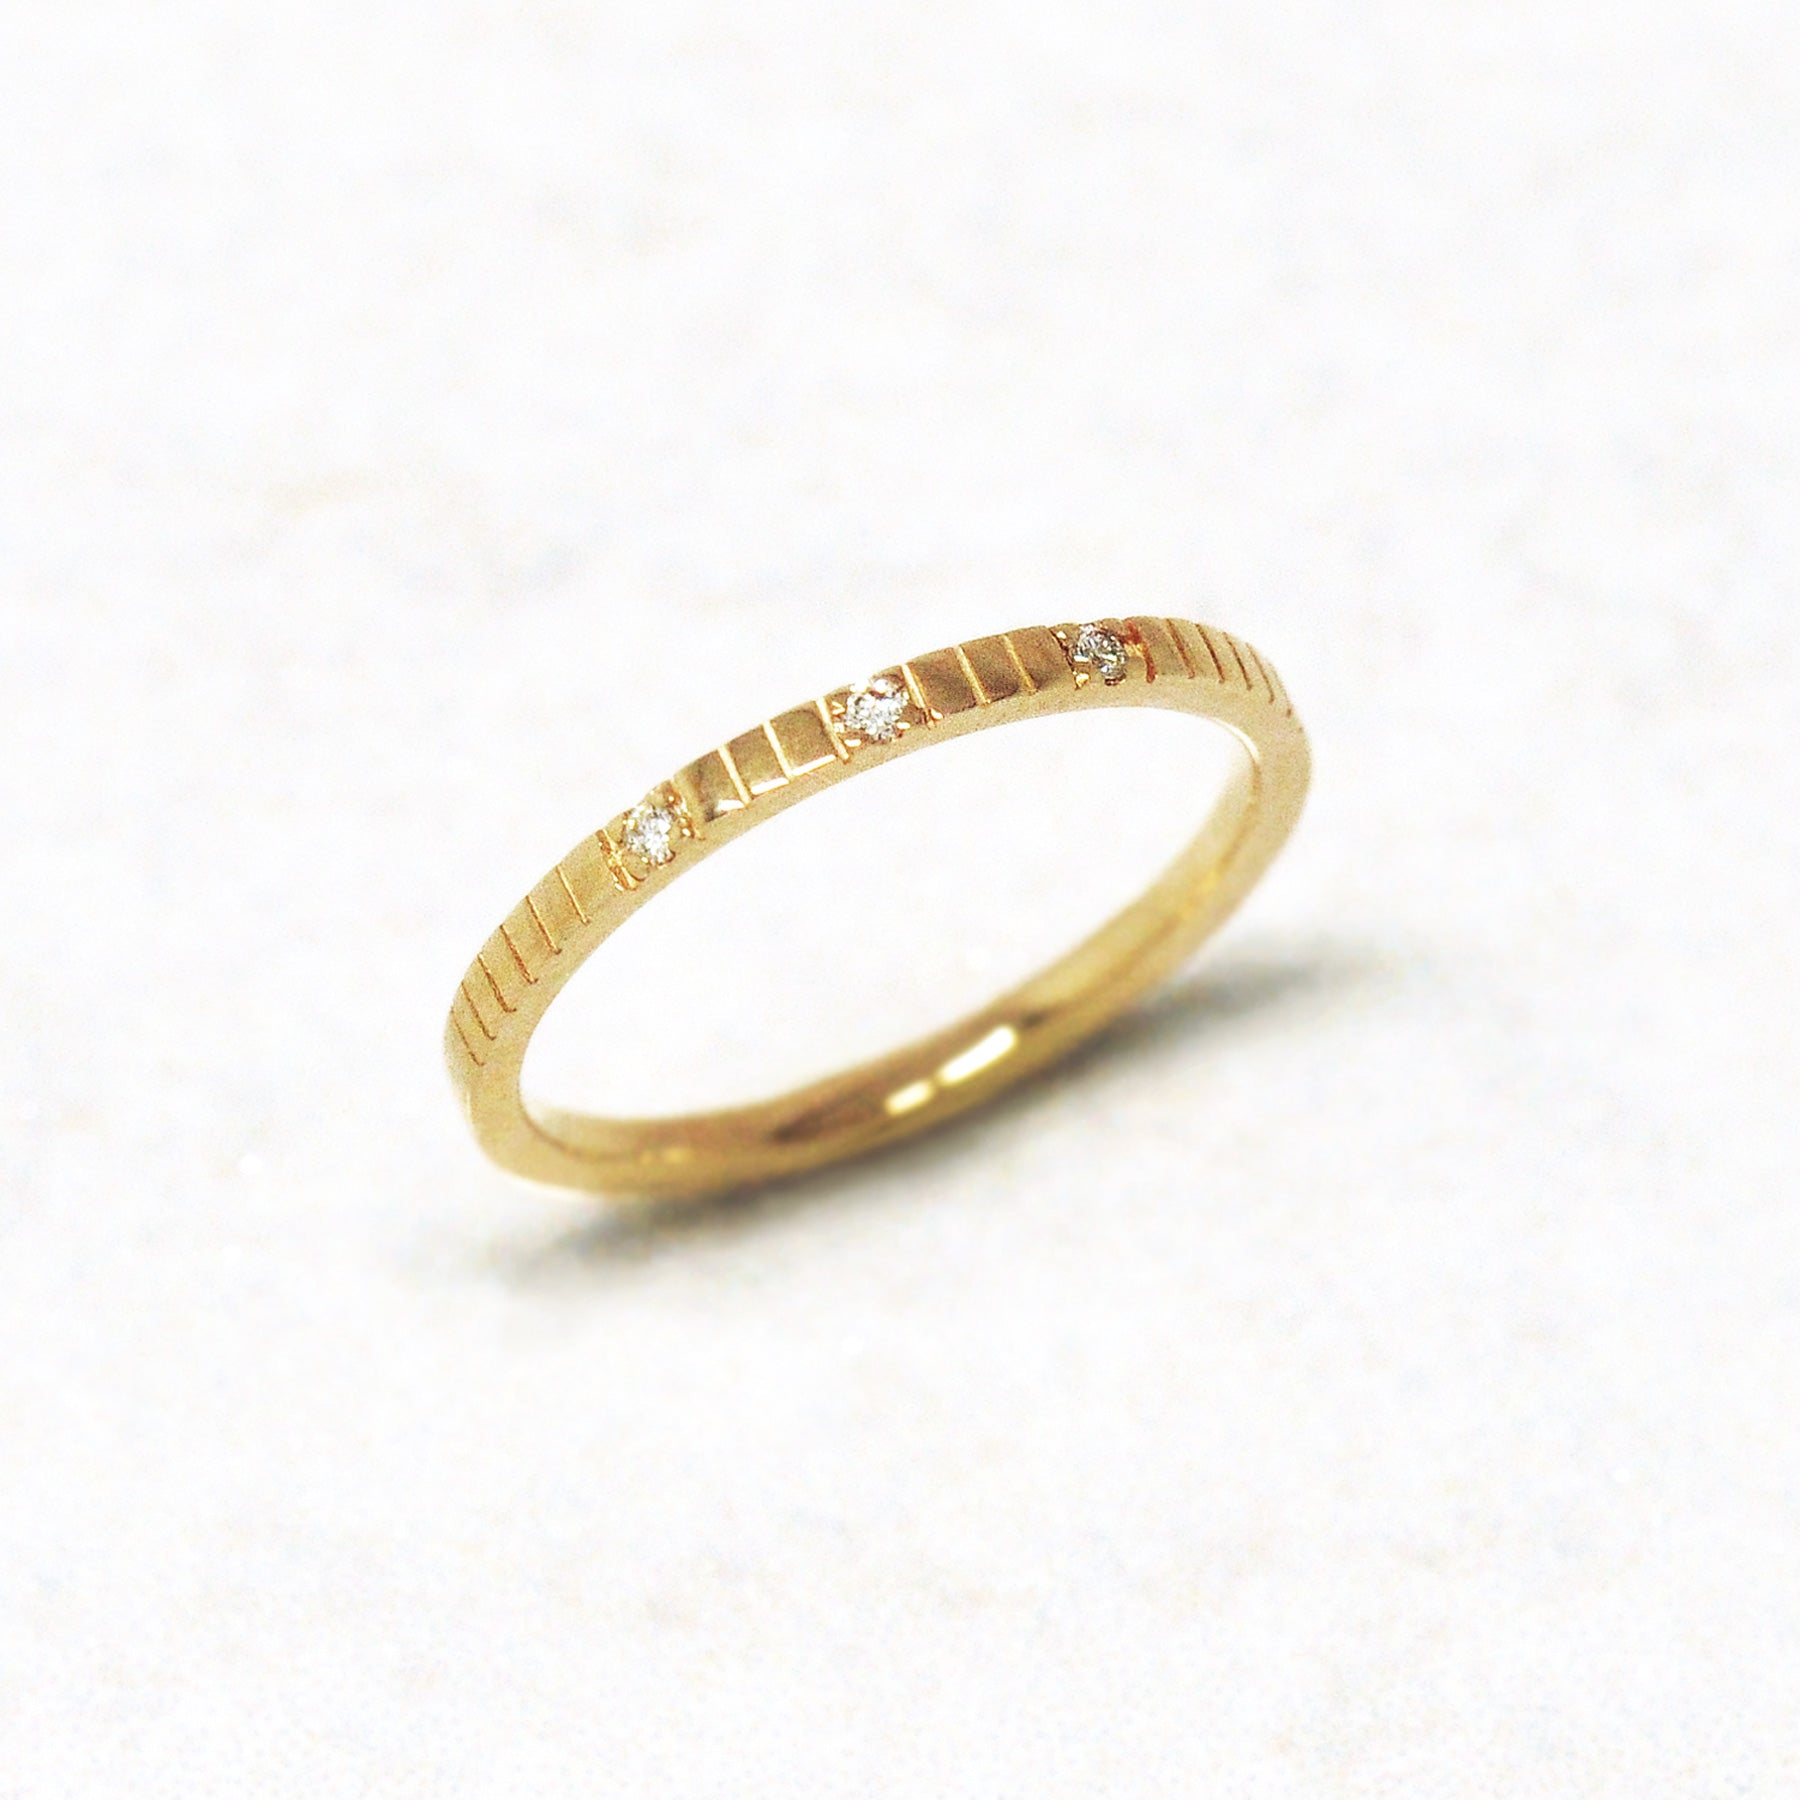 10K Yellow Gold Straight 3-Stone Diamond Pinky Ring - Product Image